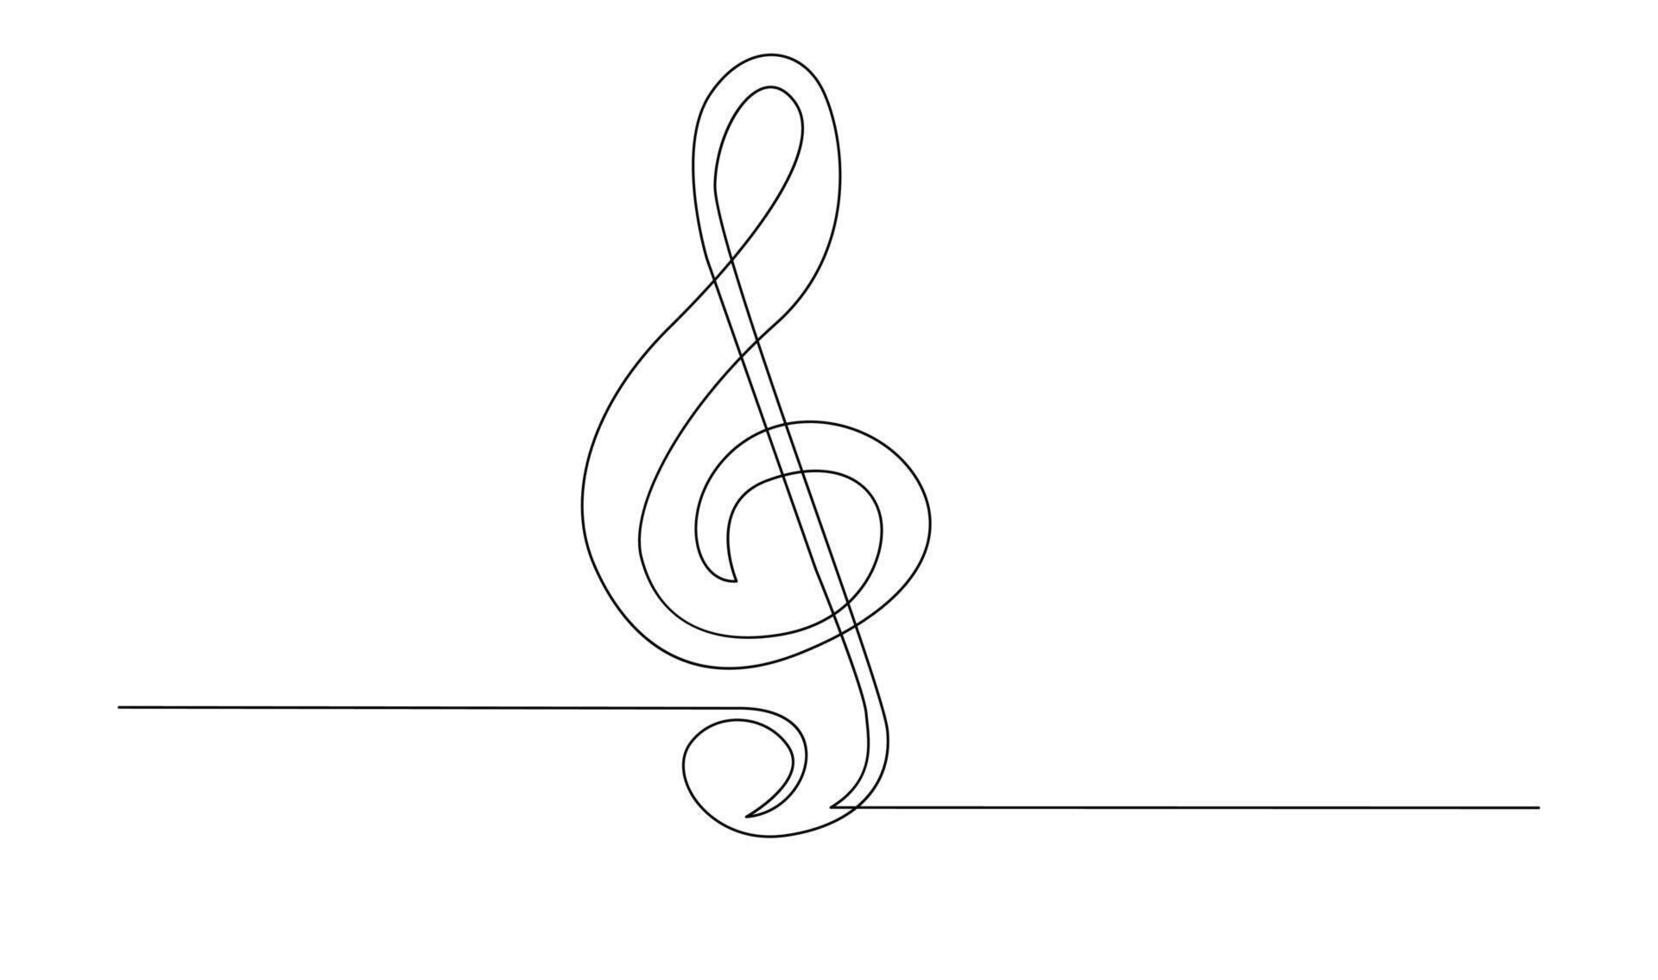 continuo soltero línea dibujo de música notas vector